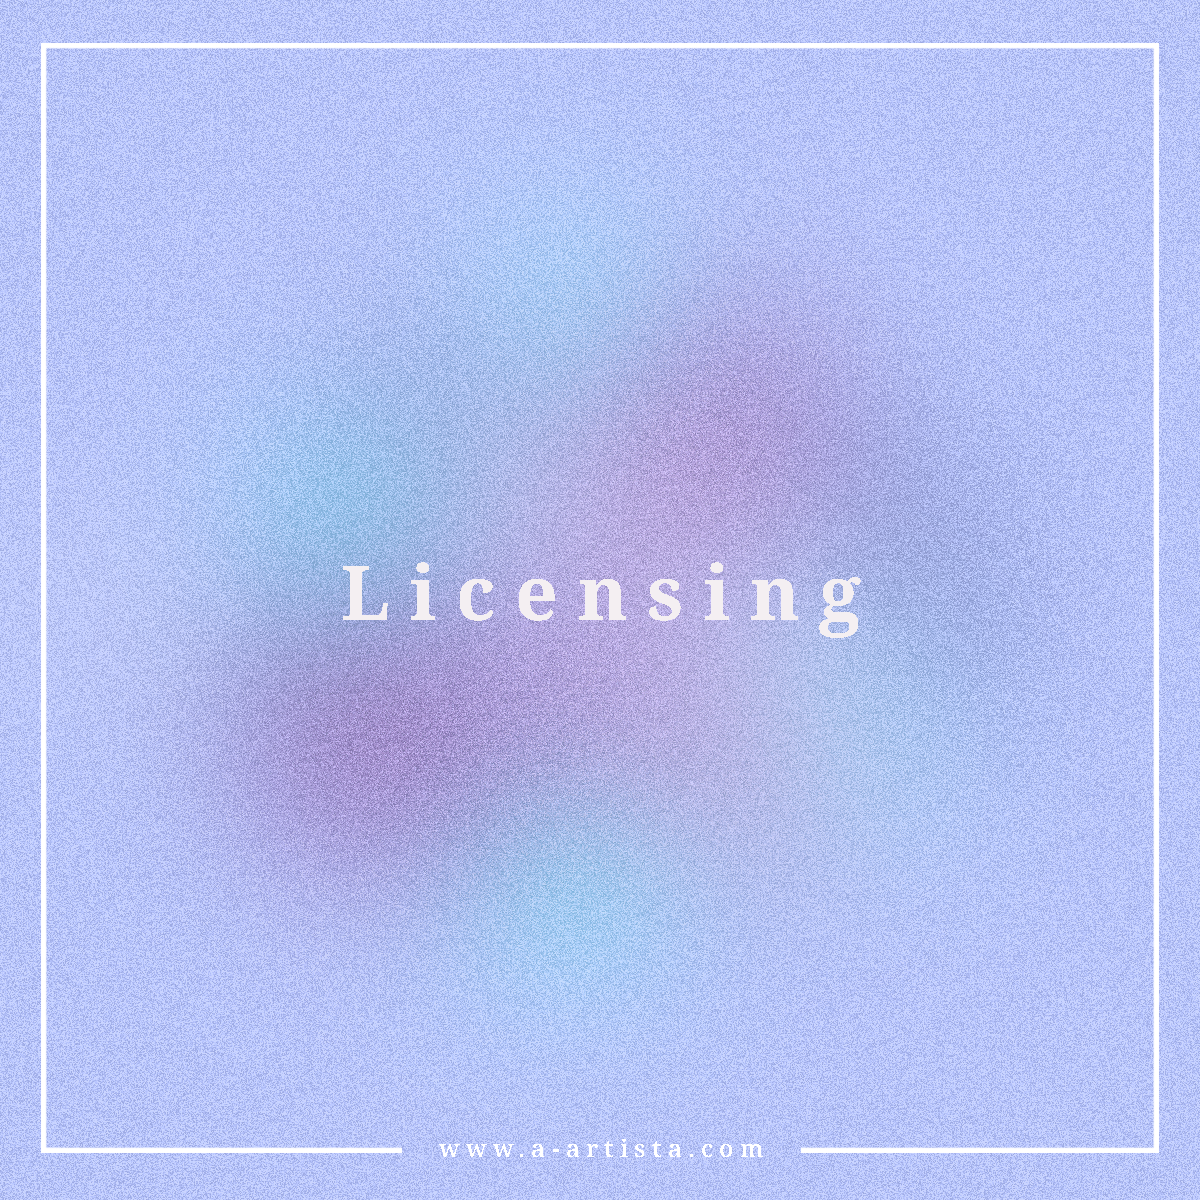 licensing